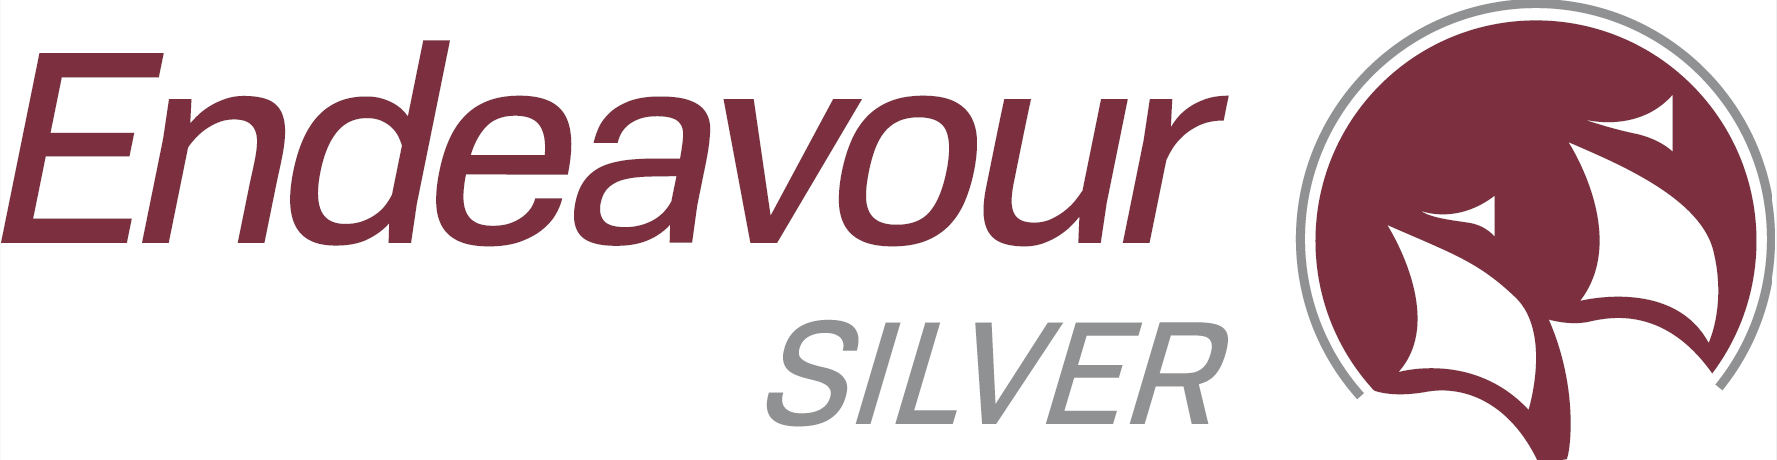 Endeavour Silver Corp.